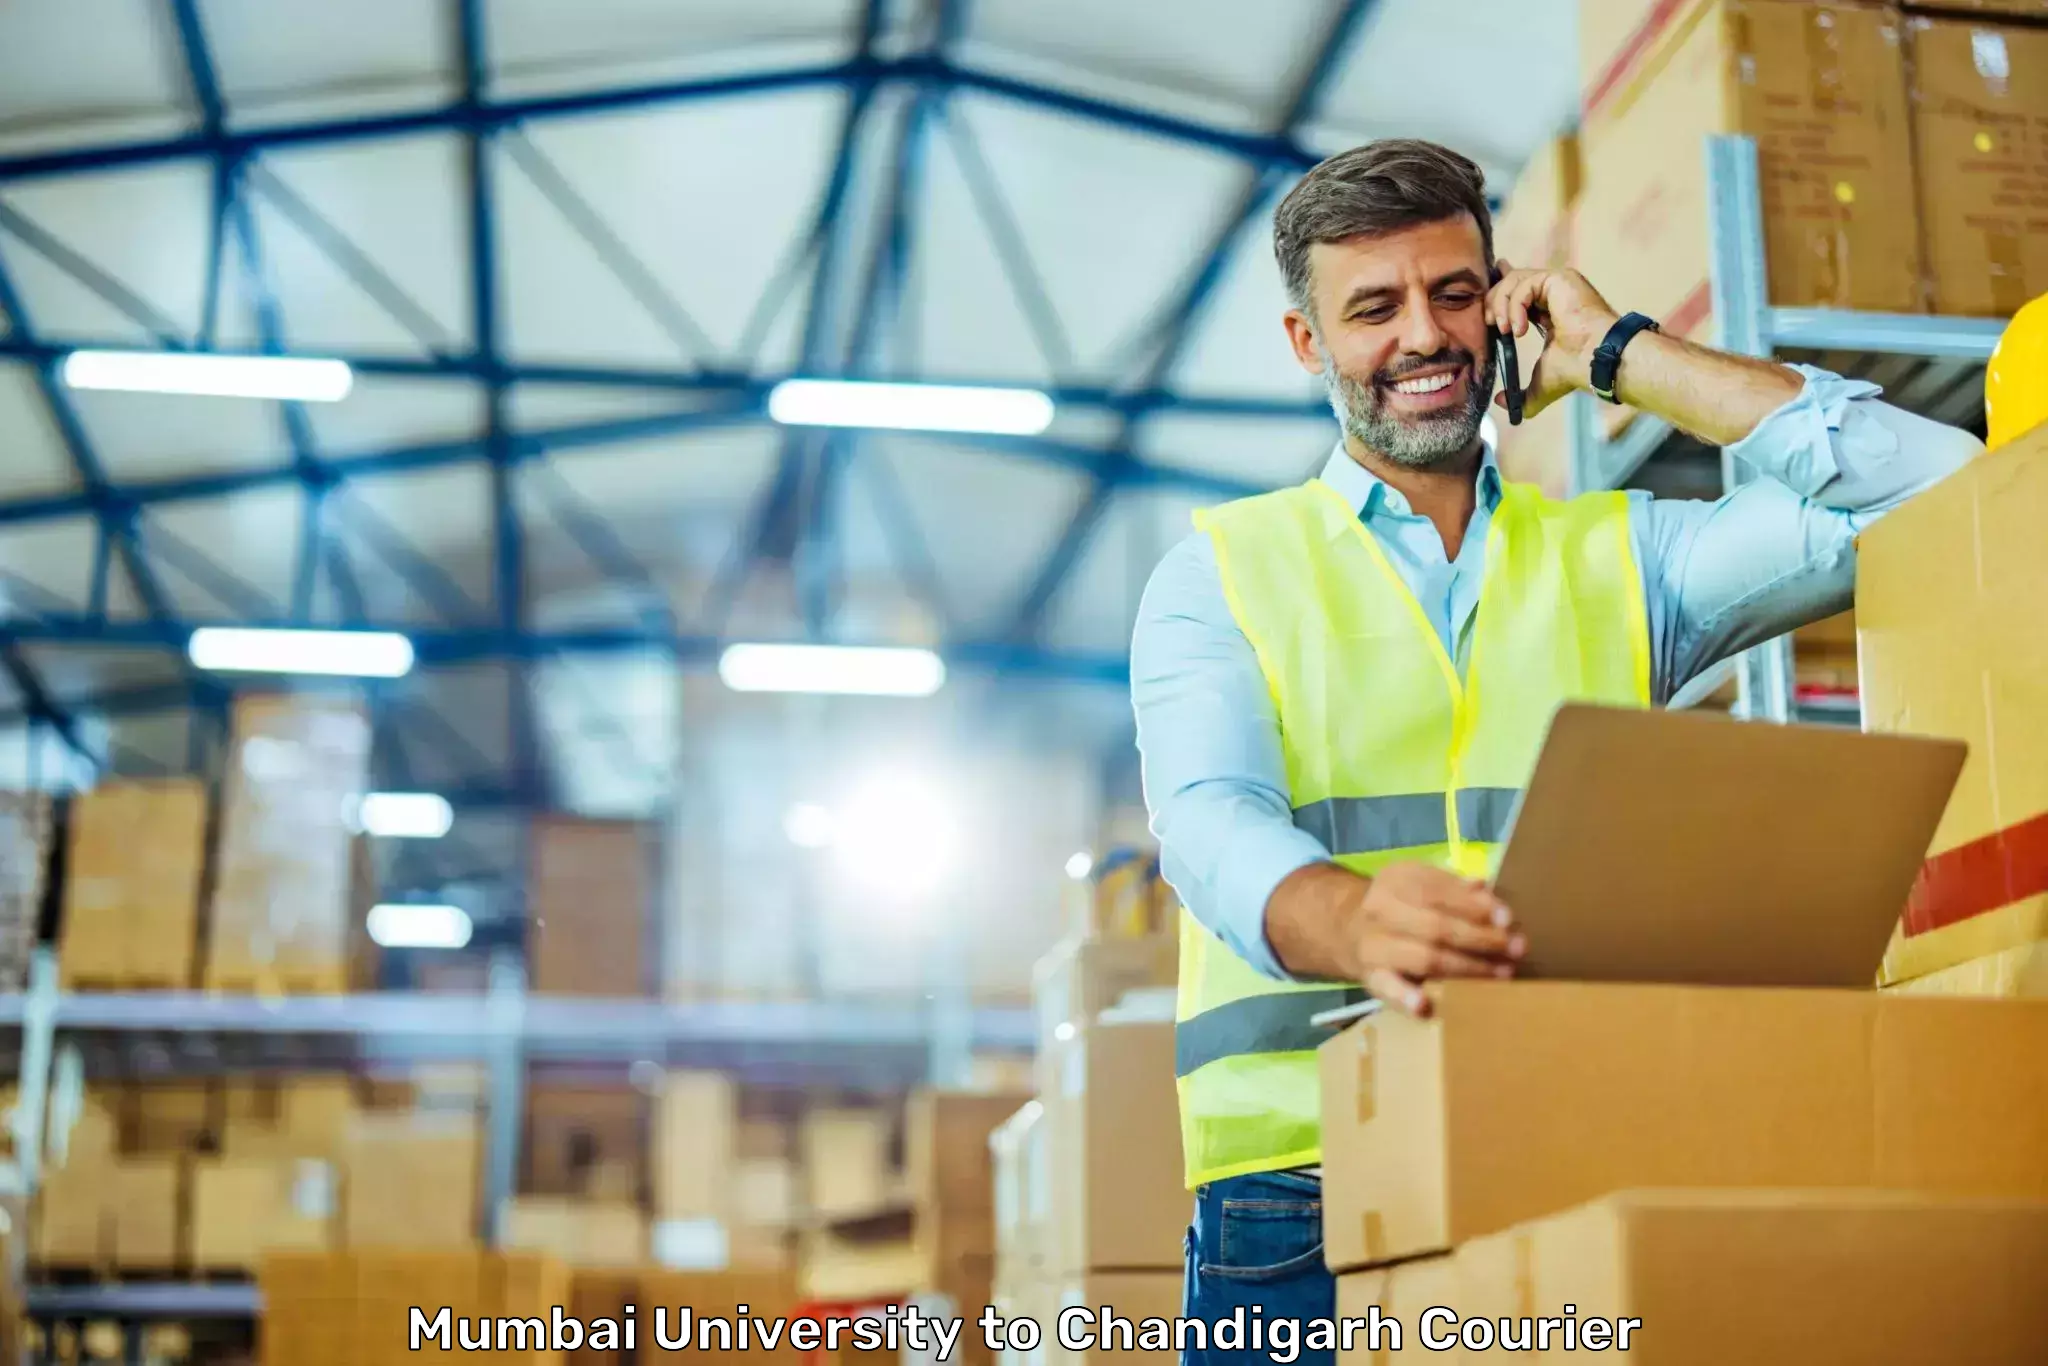 High-speed parcel service Mumbai University to Chandigarh